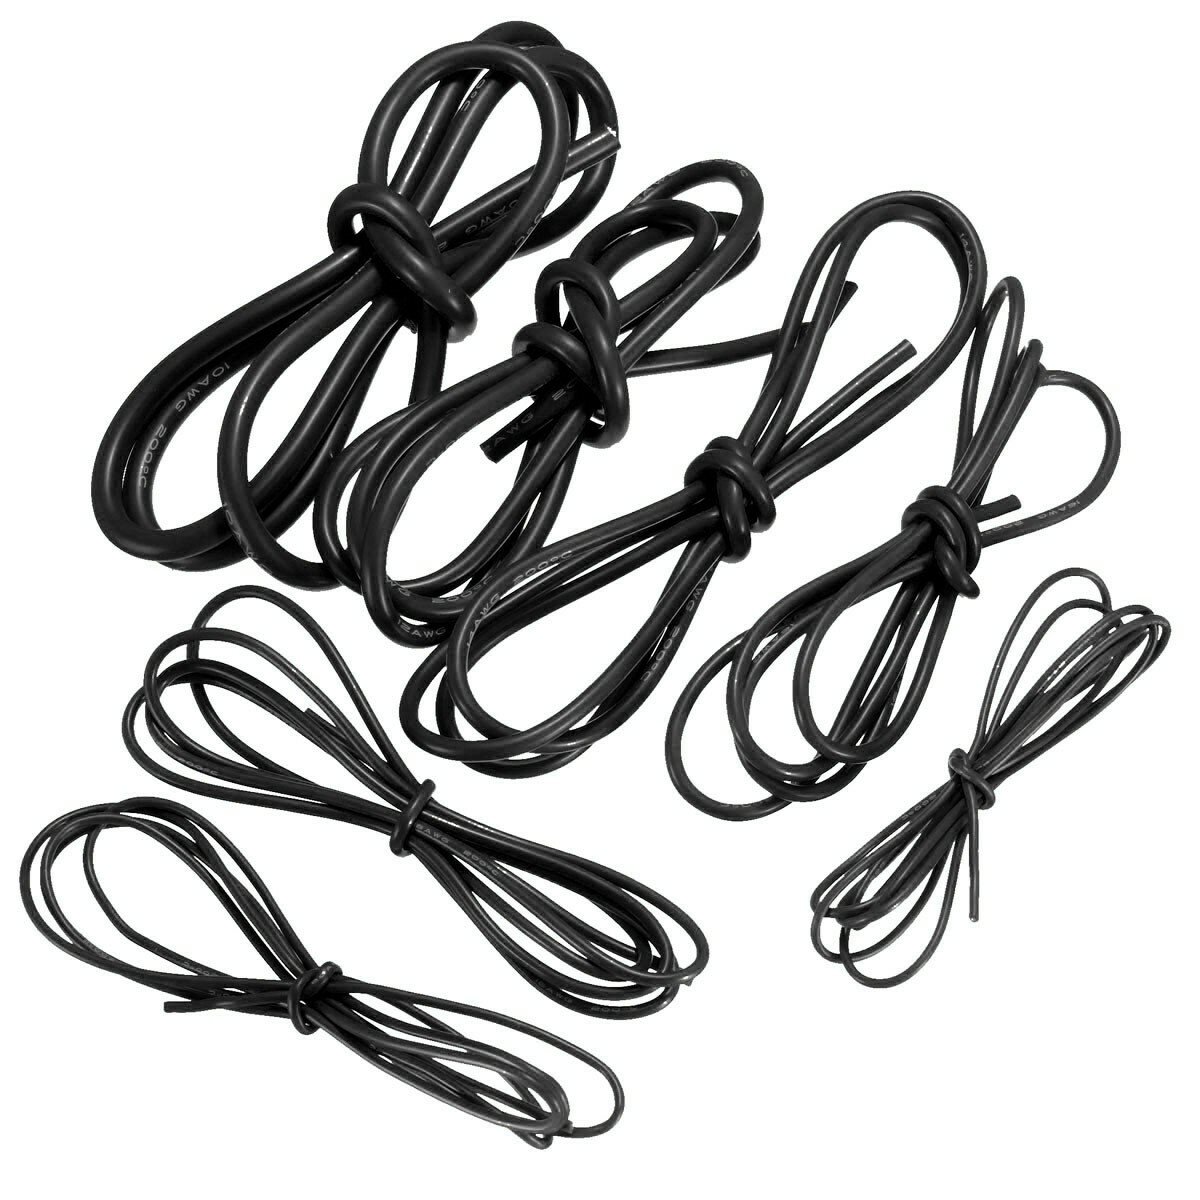 DANIU 1 Meter Zwart Silicon Wire Cable 10/12/14/16/18/20 / 22AWG Flexibele Kabel